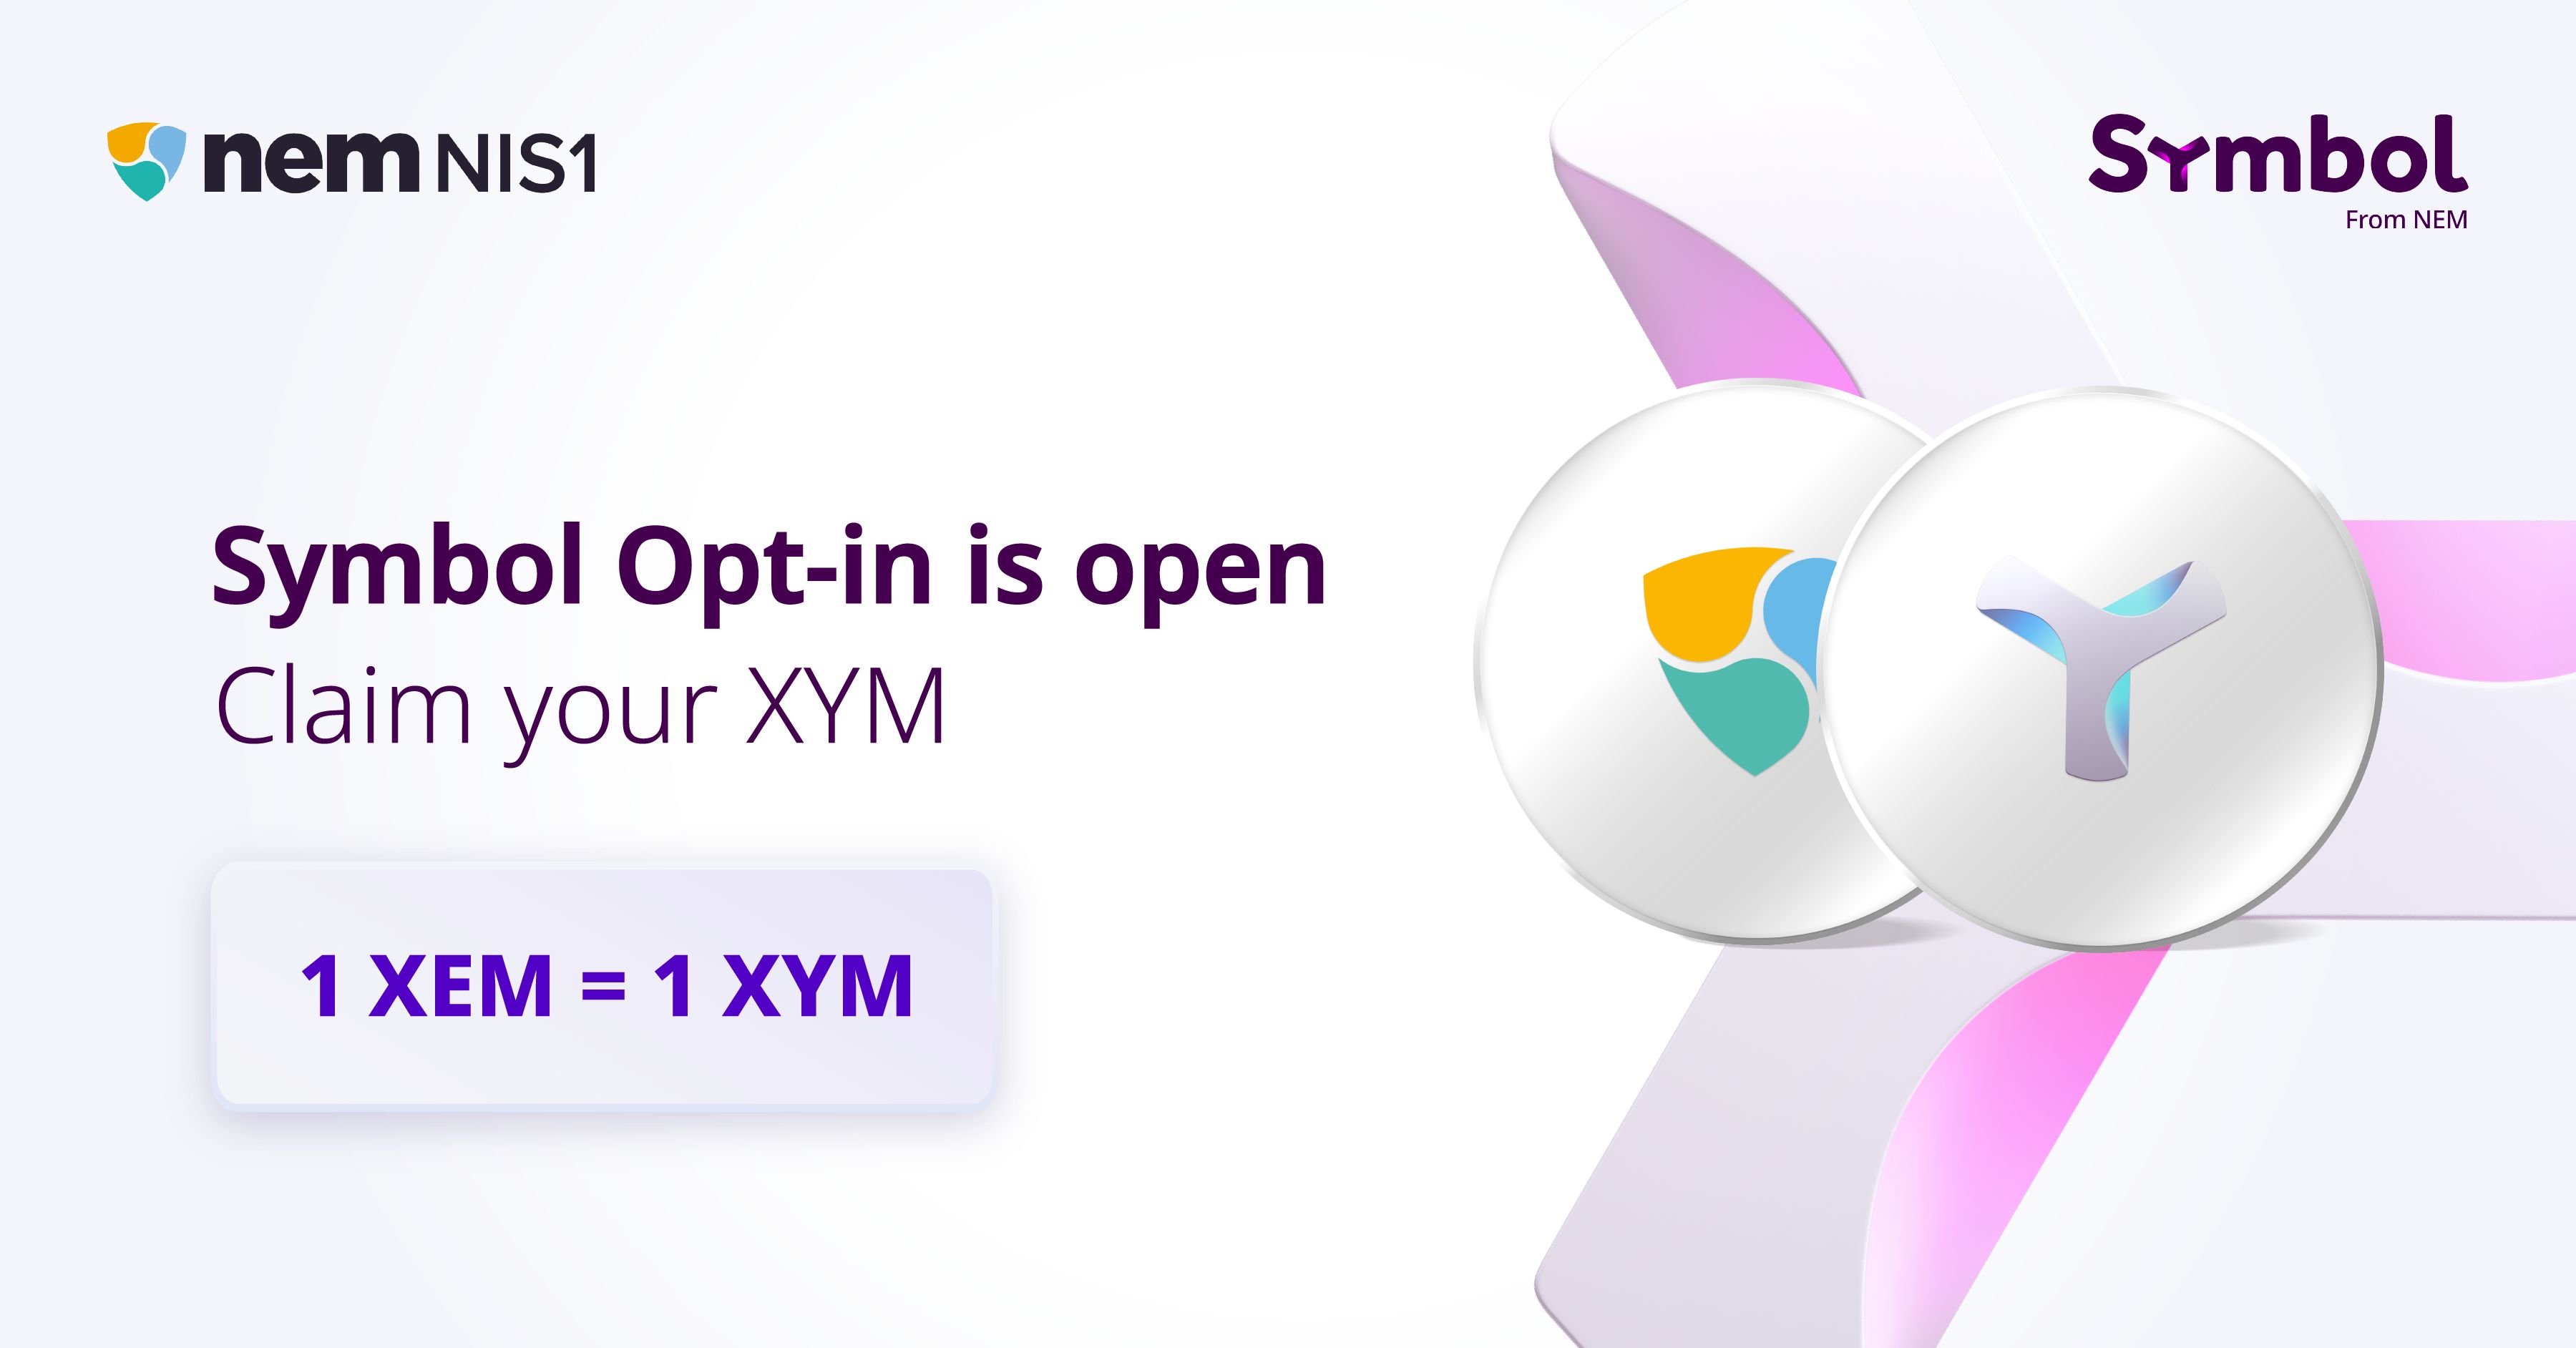 [Announcement] NEM is Launching The Symbol Blockchain with A Native Token (1 XEM = 1 XYM)